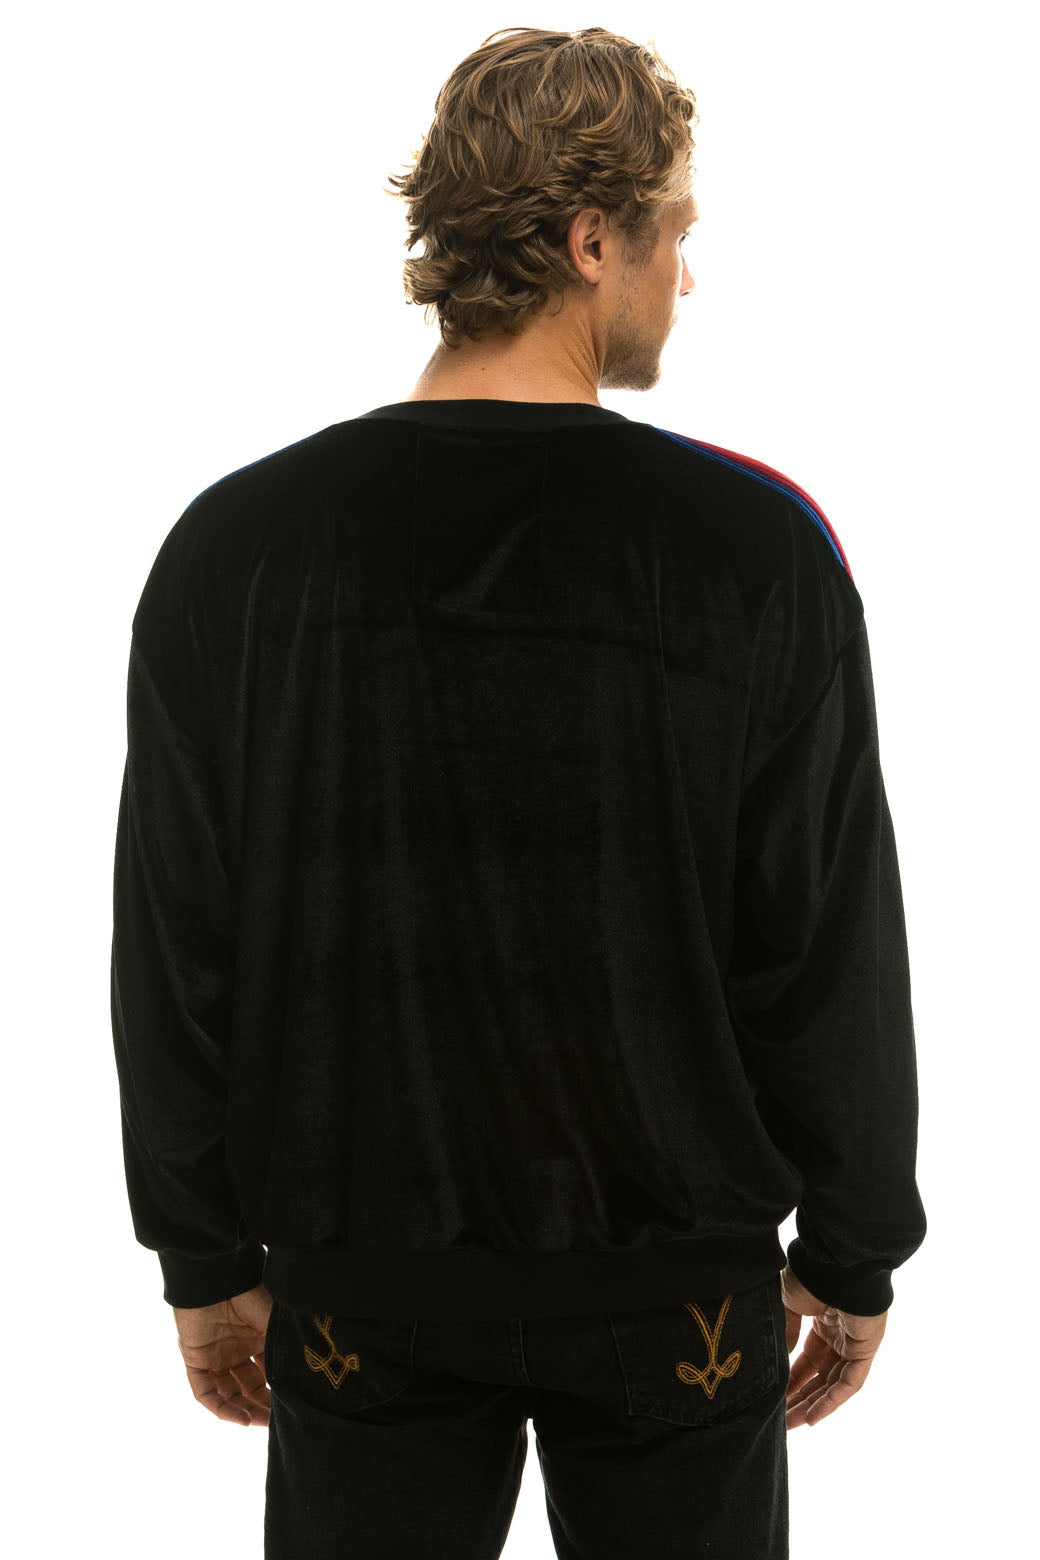 CLASSIC VELVET RELAXED SWEATSHIRT - BLACK Sweatshirt Aviator Nation 